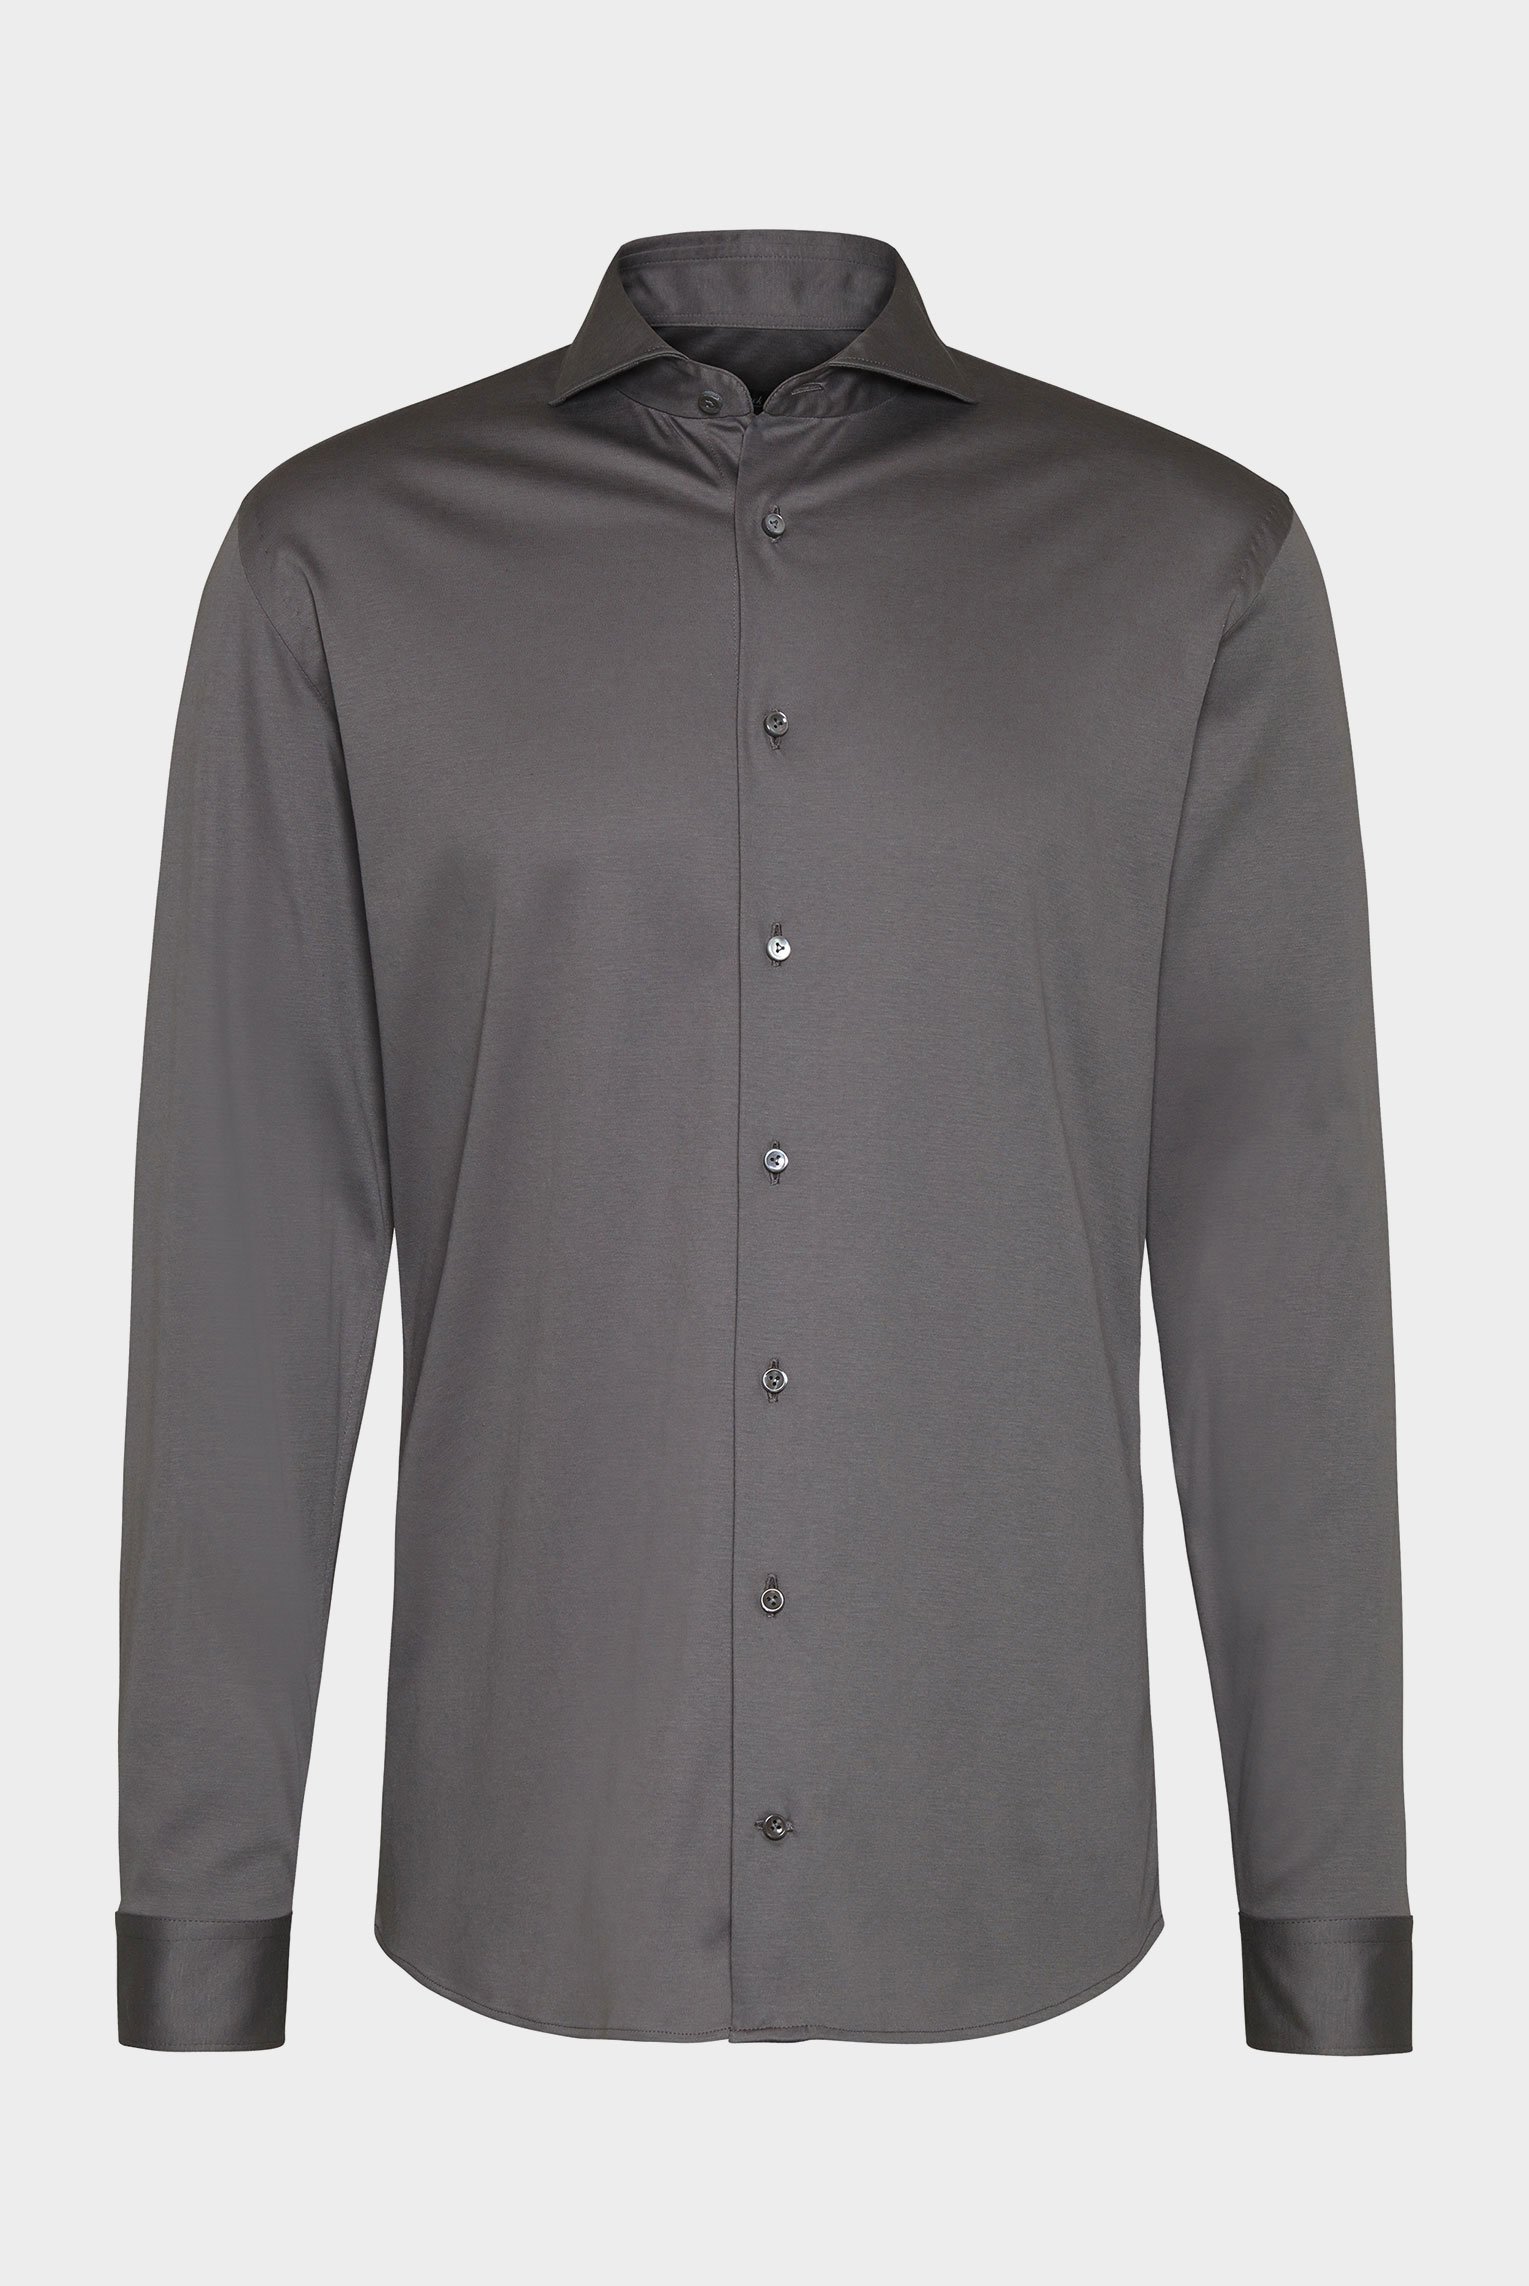 Casual Hemden+Jersey Hemd aus Schweizer Baumwolle Tailor Fit+20.1683.UC.180031.070.L